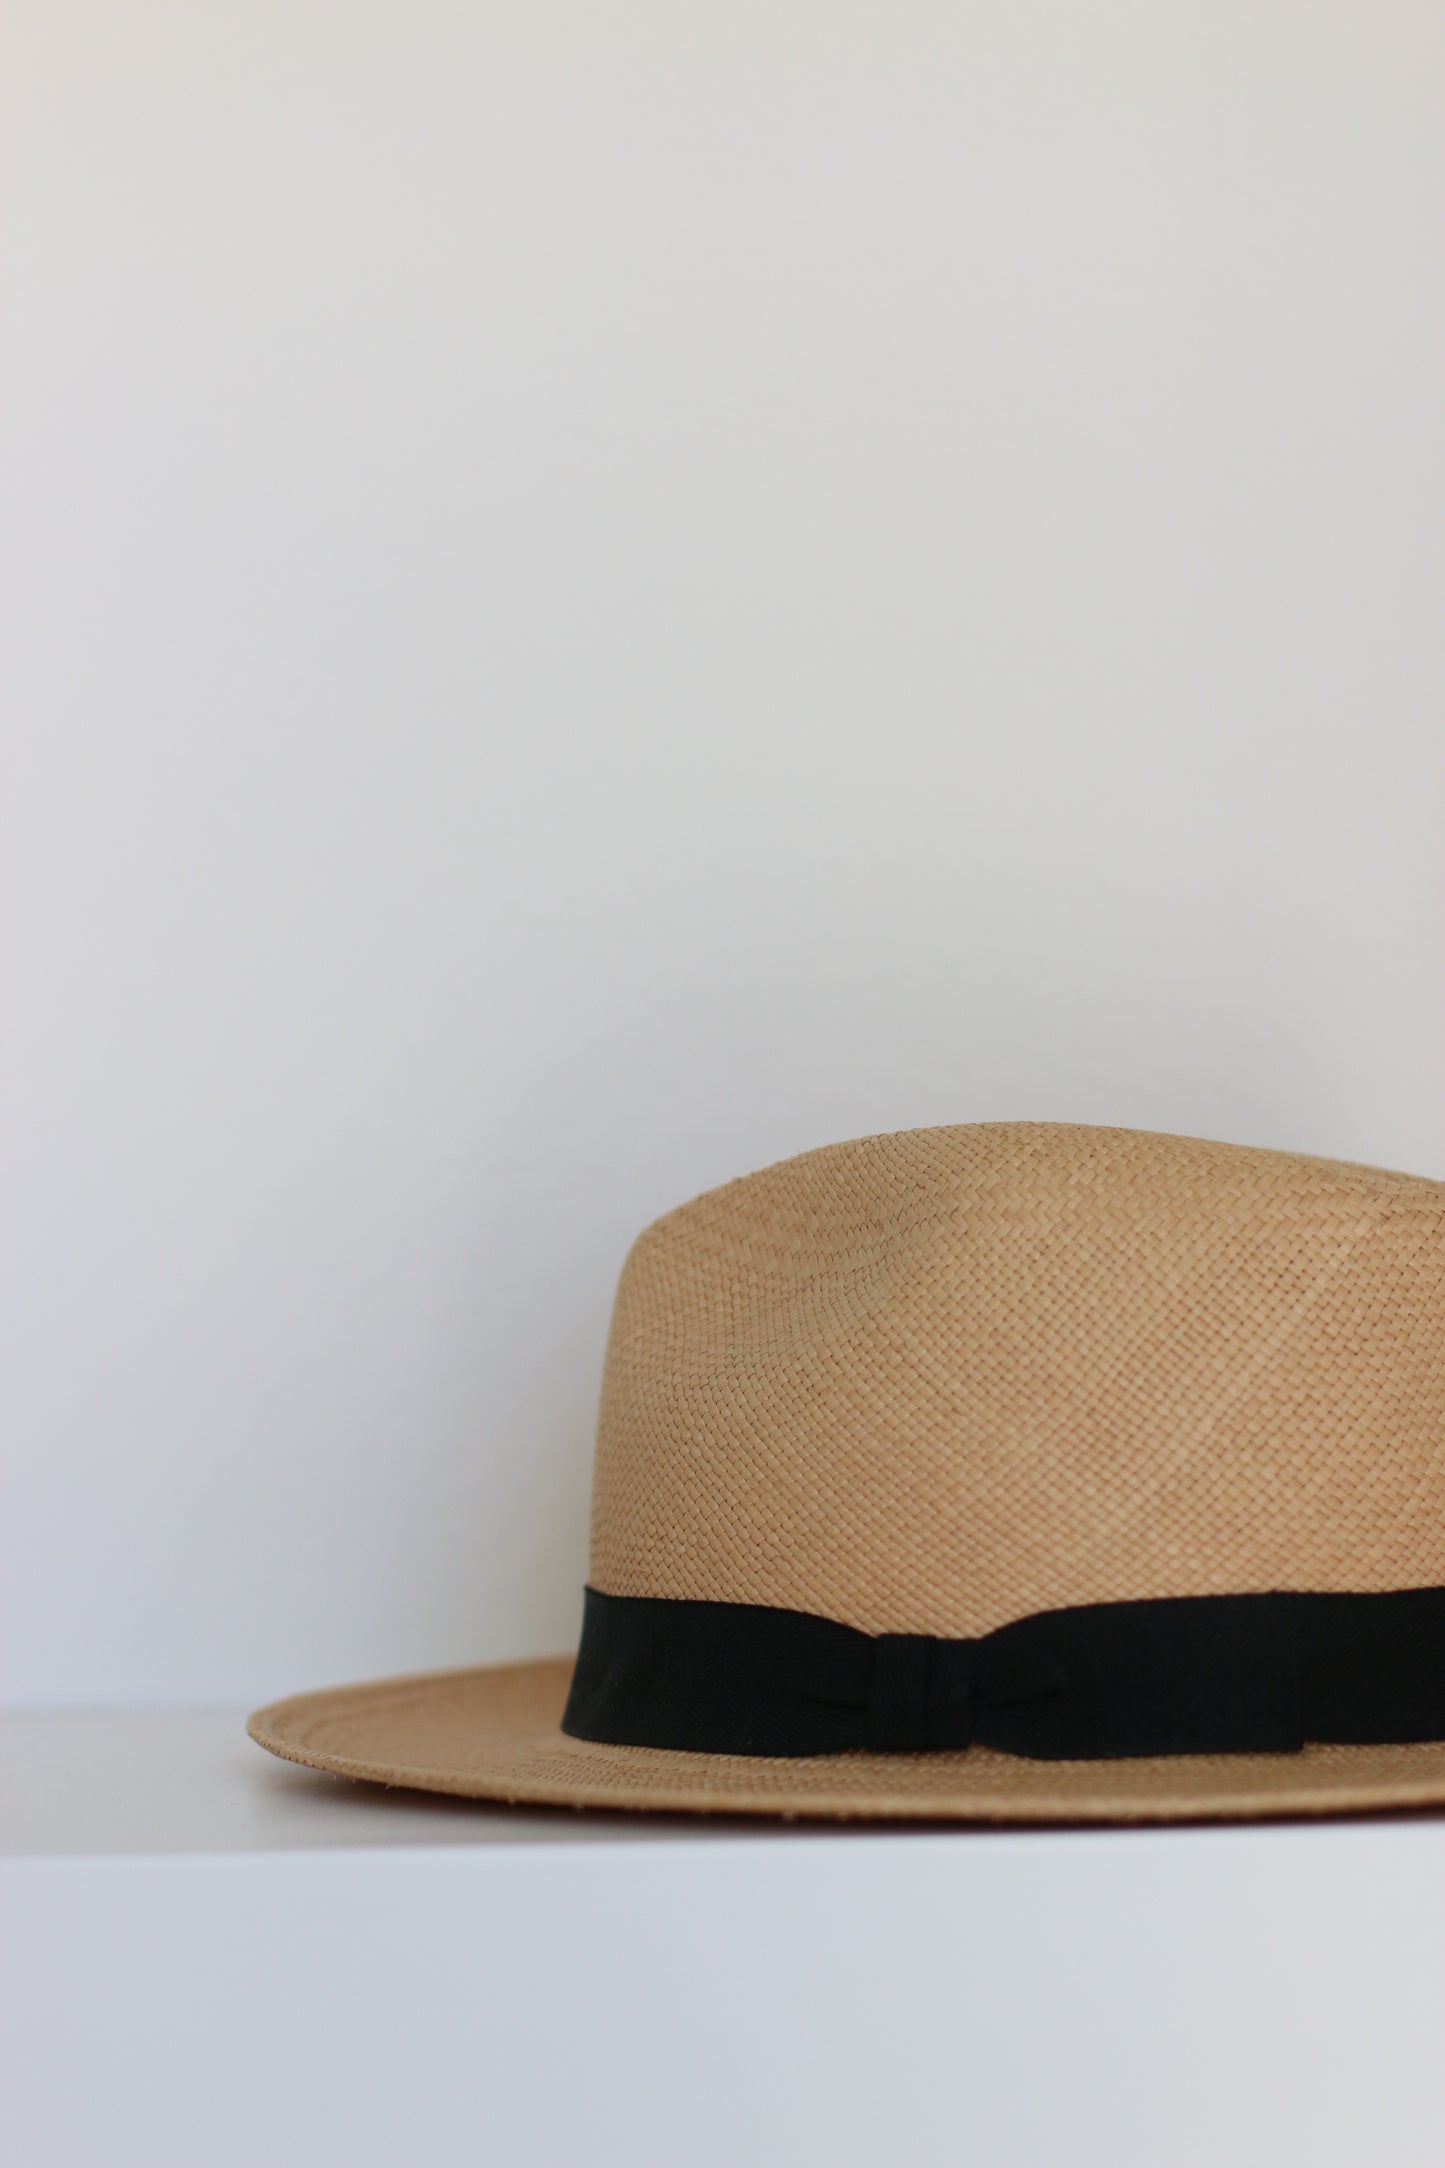 "ANEA HILL Napa Hat: High-Quality Elegance for Stylish Protection""ANEA HILL Napa Hat: High-Quality Elegance for Stylish Protection""ANEA HILL Napa Hat: High-Quality Elegance for Stylish Protection"